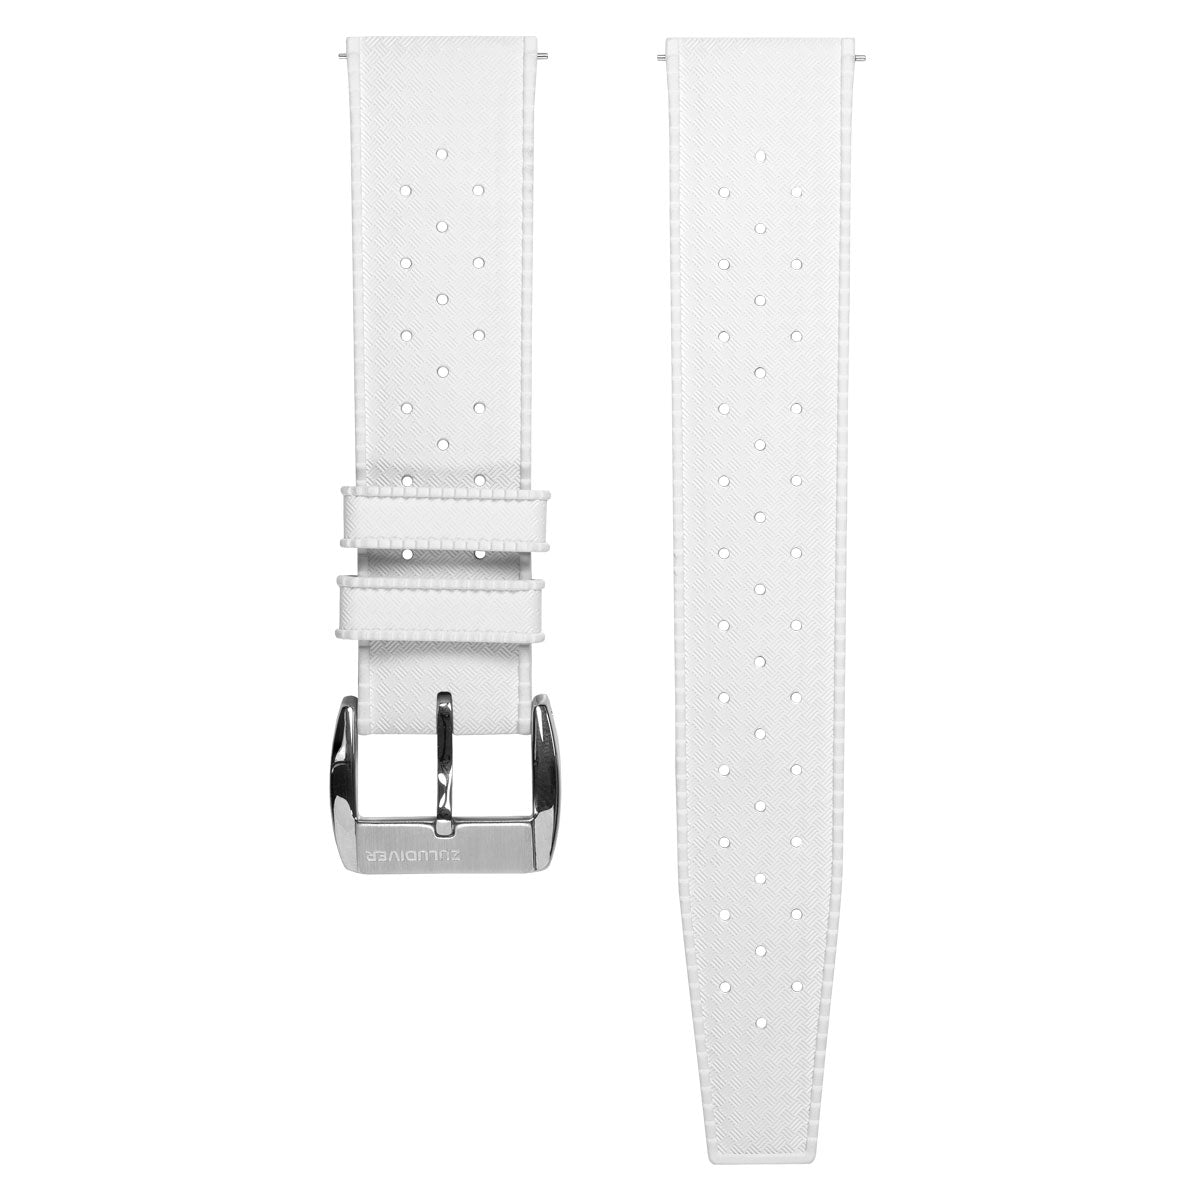 PRIMRIA® Blanc Mix 2-piece Quick-Release nylon watch straps / watch bands -  PRIMRIA Watch Bands & Straps